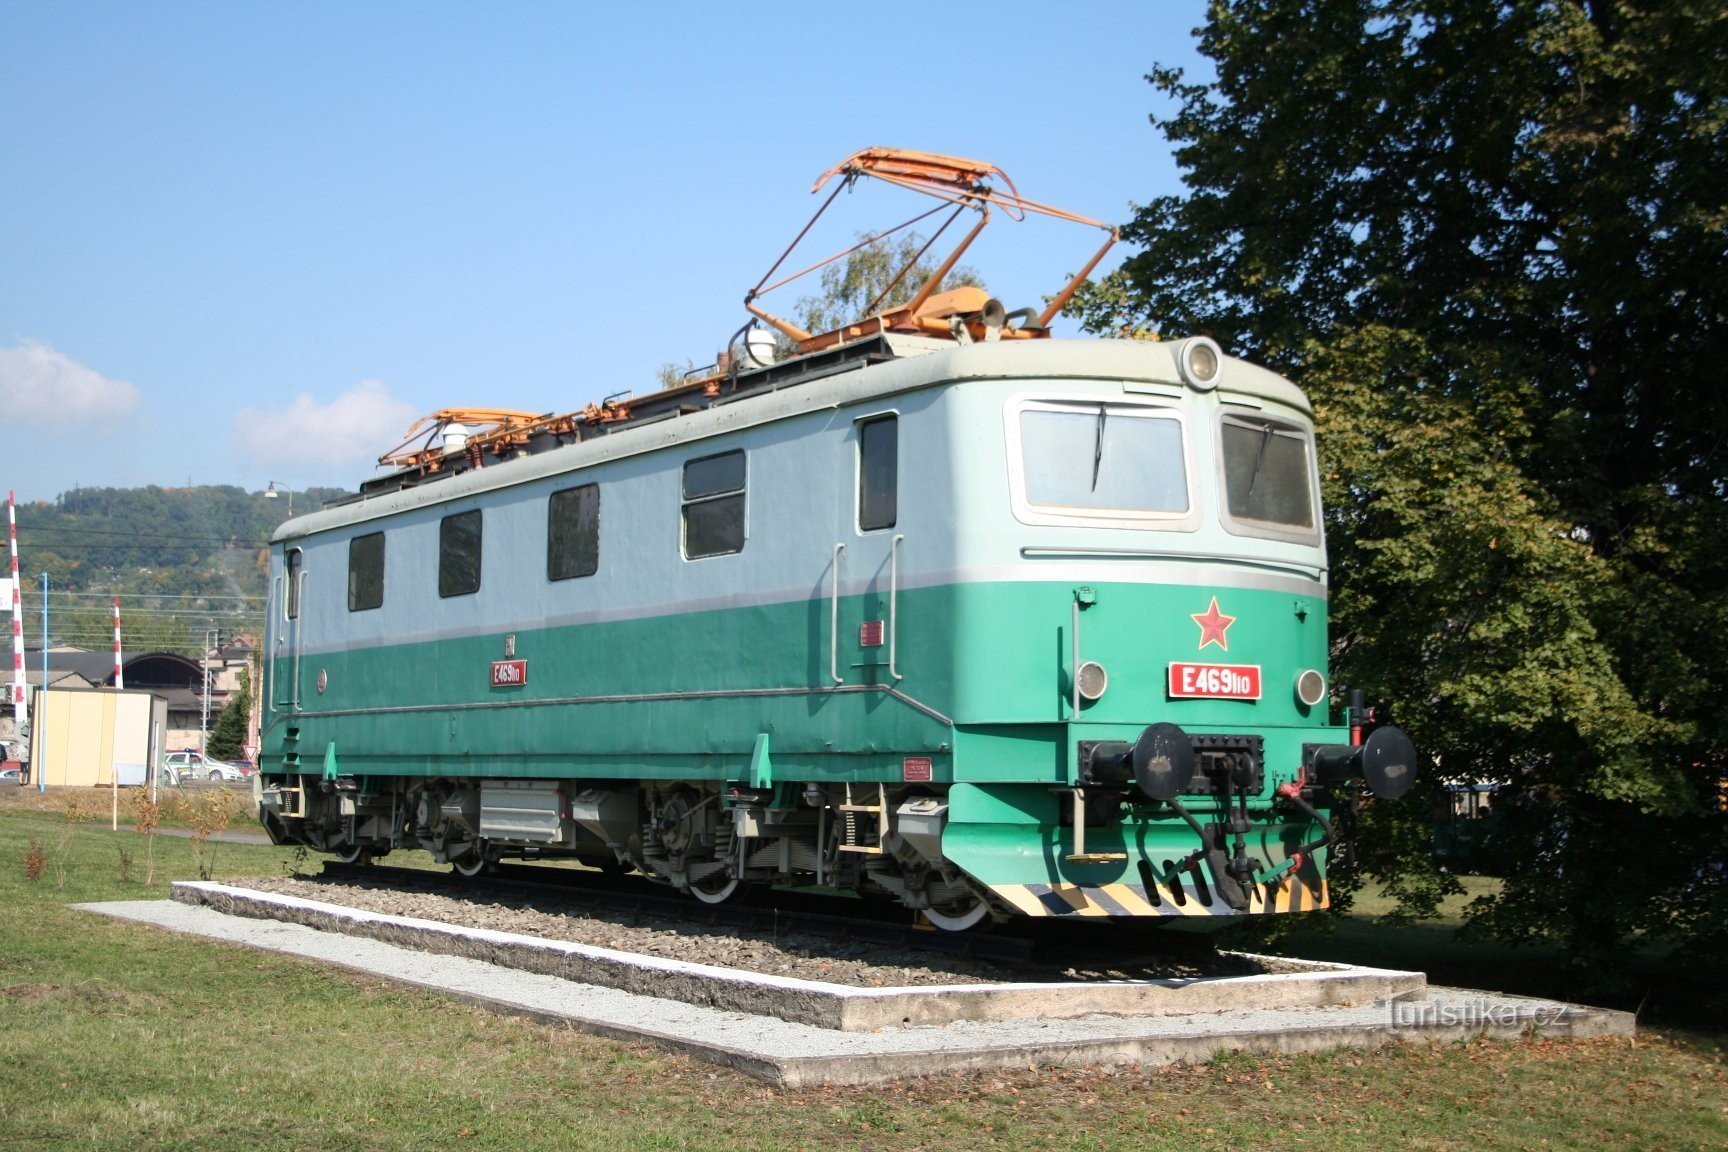 Monumento a la locomotora - E 469.110